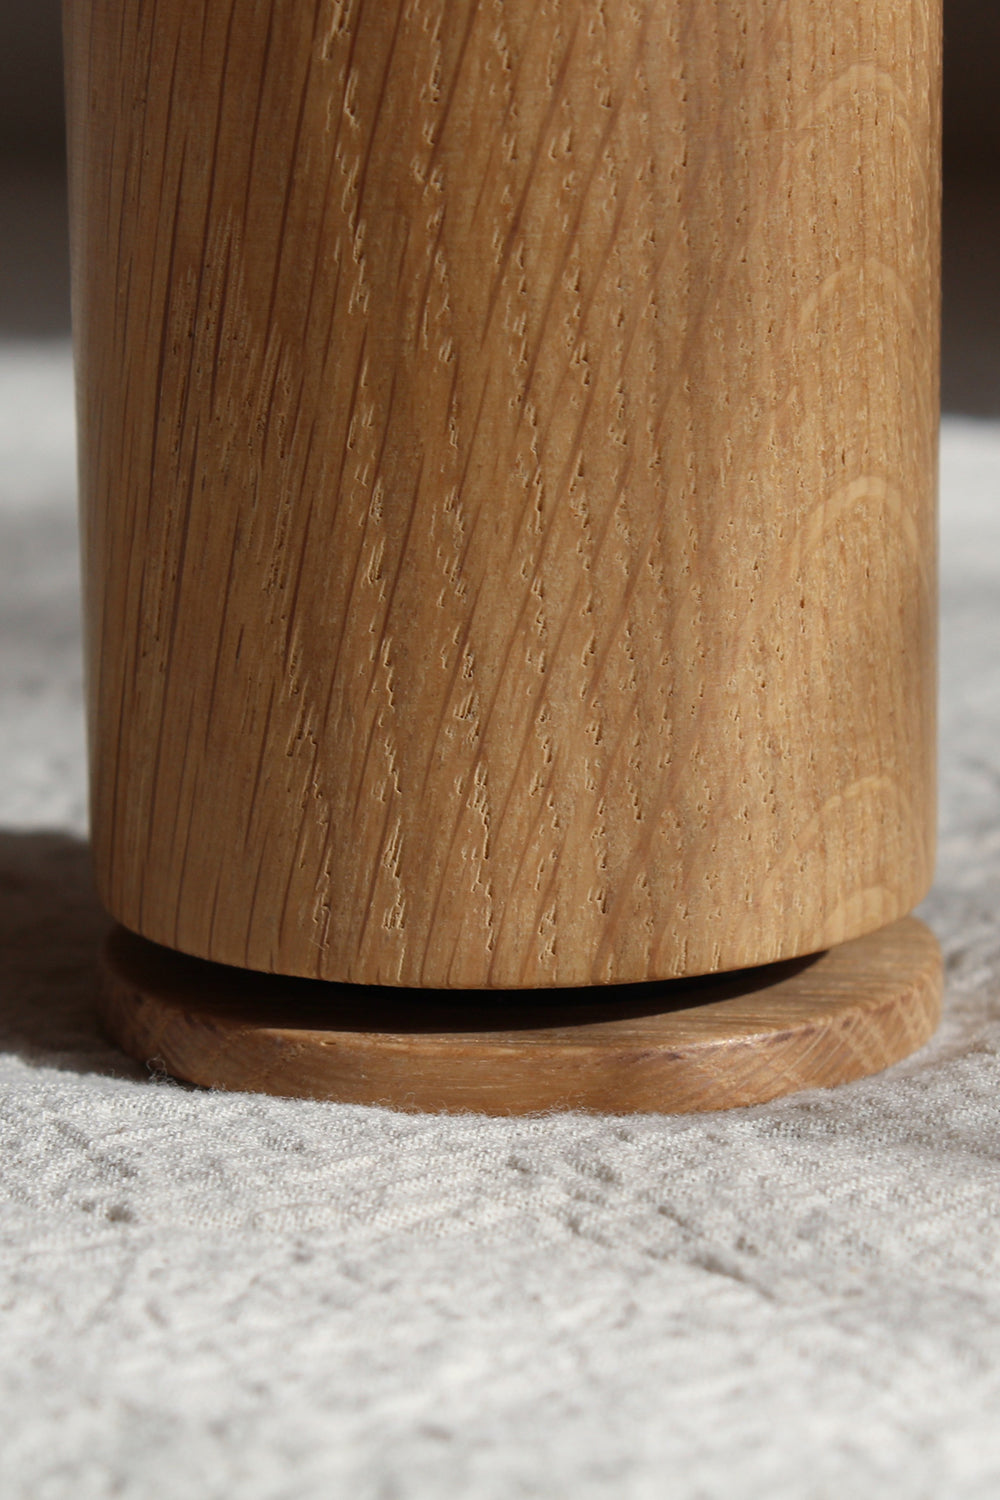 Detail shot of the EKTA Living Crush Me Pepper grinder made from natural oak